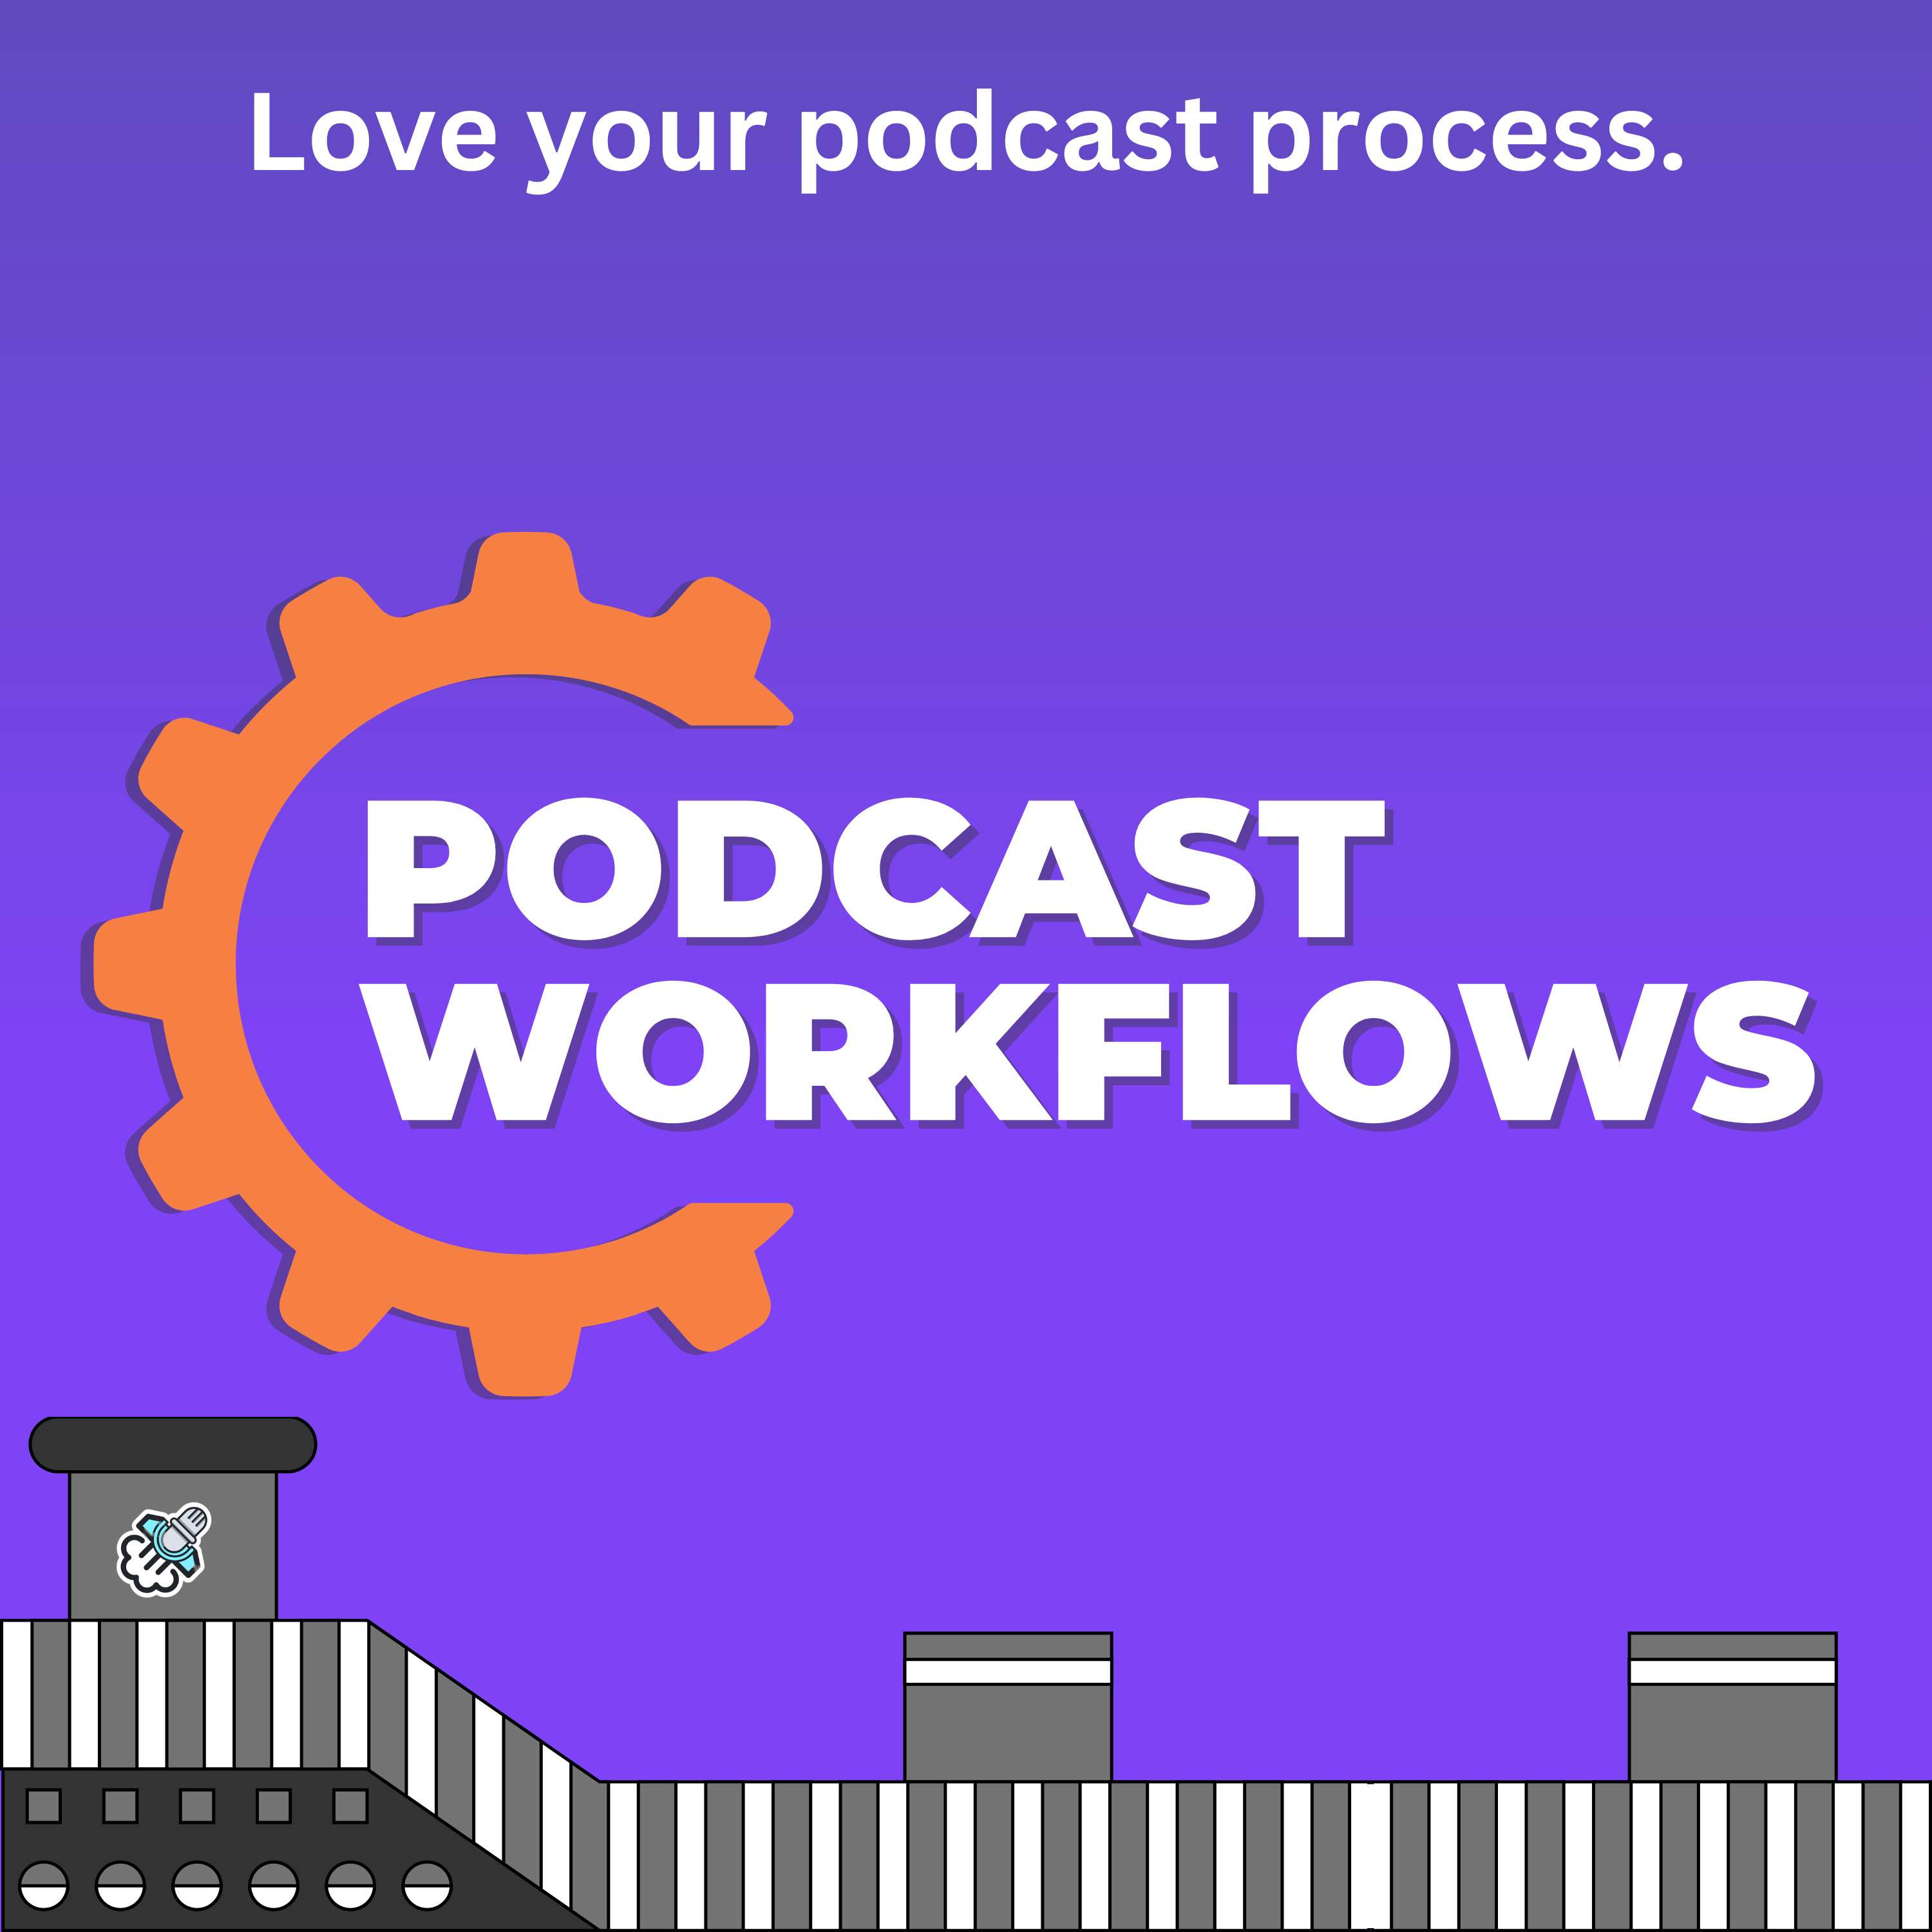 Podcast Workflows: How Trailer Park Got 10,000 Downloads in 6 weeks.